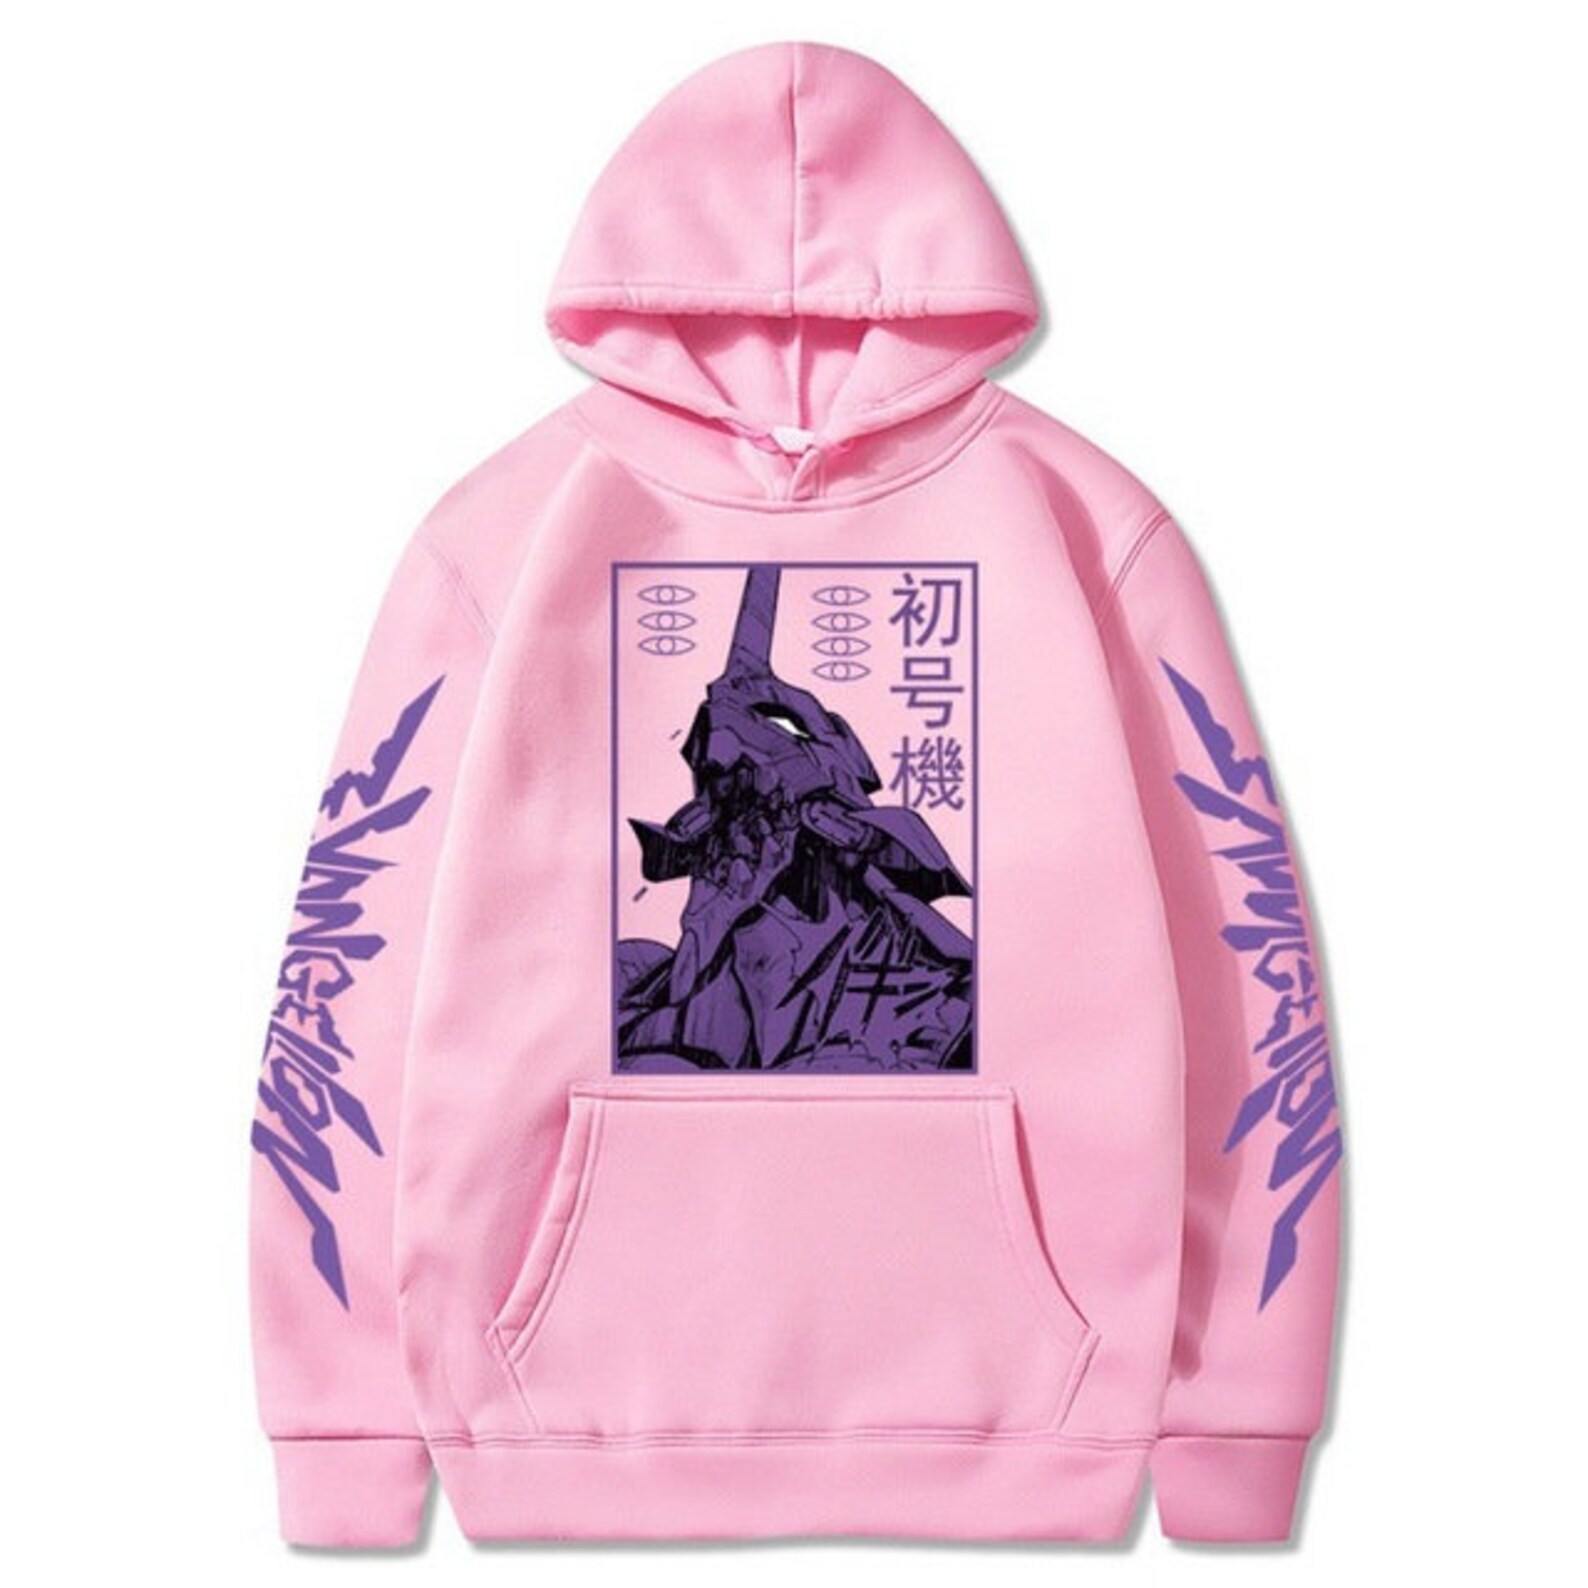 Evangelion Hoodie Evangelion Sweater Anime Hoodie Anime - Etsy